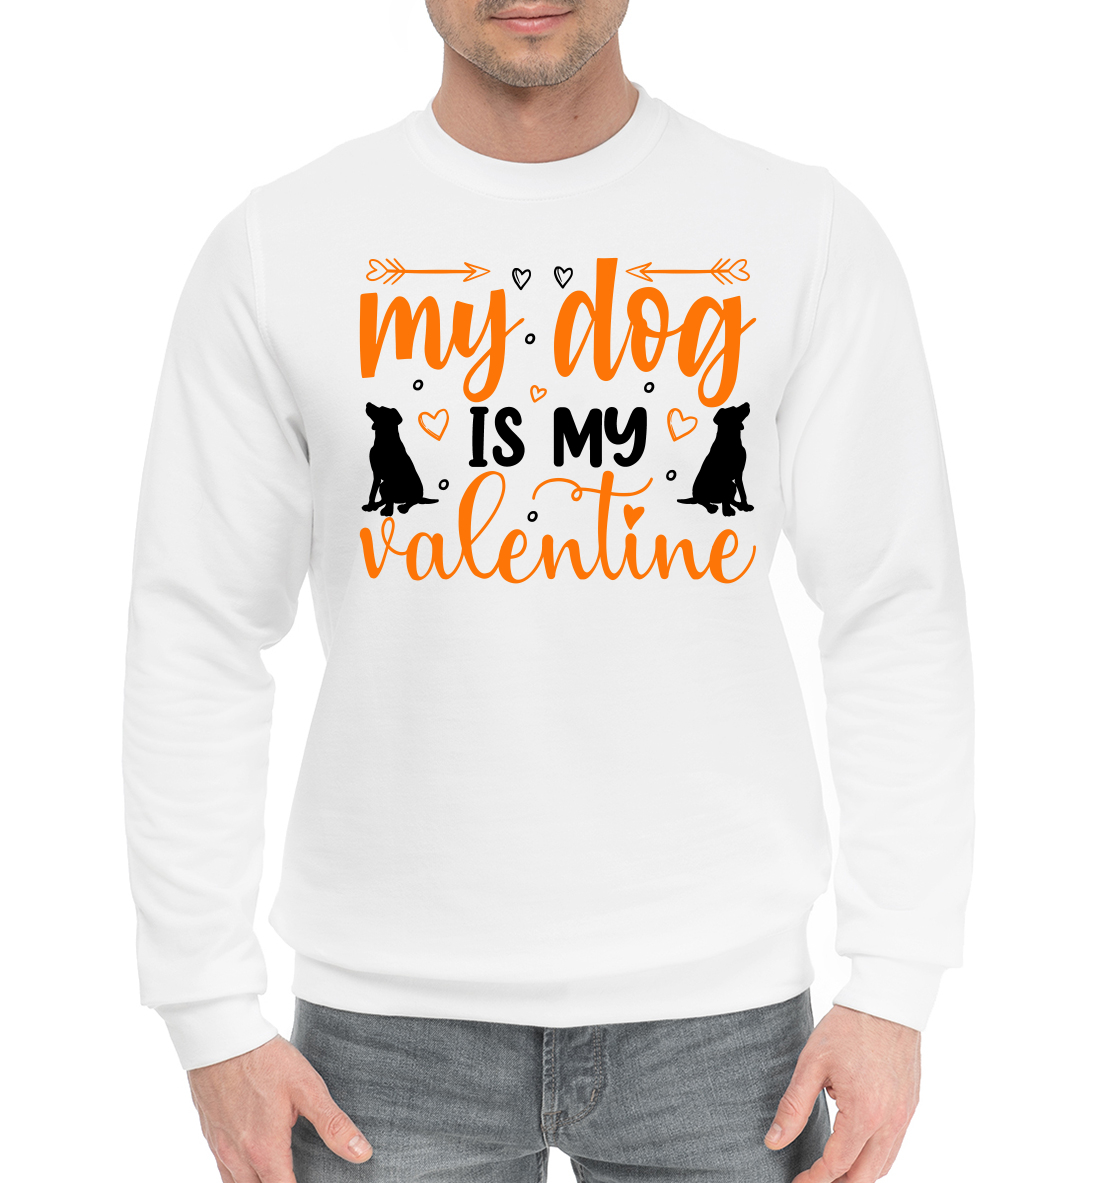 Мужской Хлопковый свитшот с принтом My dog is my valentine, артикул 14F-215479-hsw-2mp